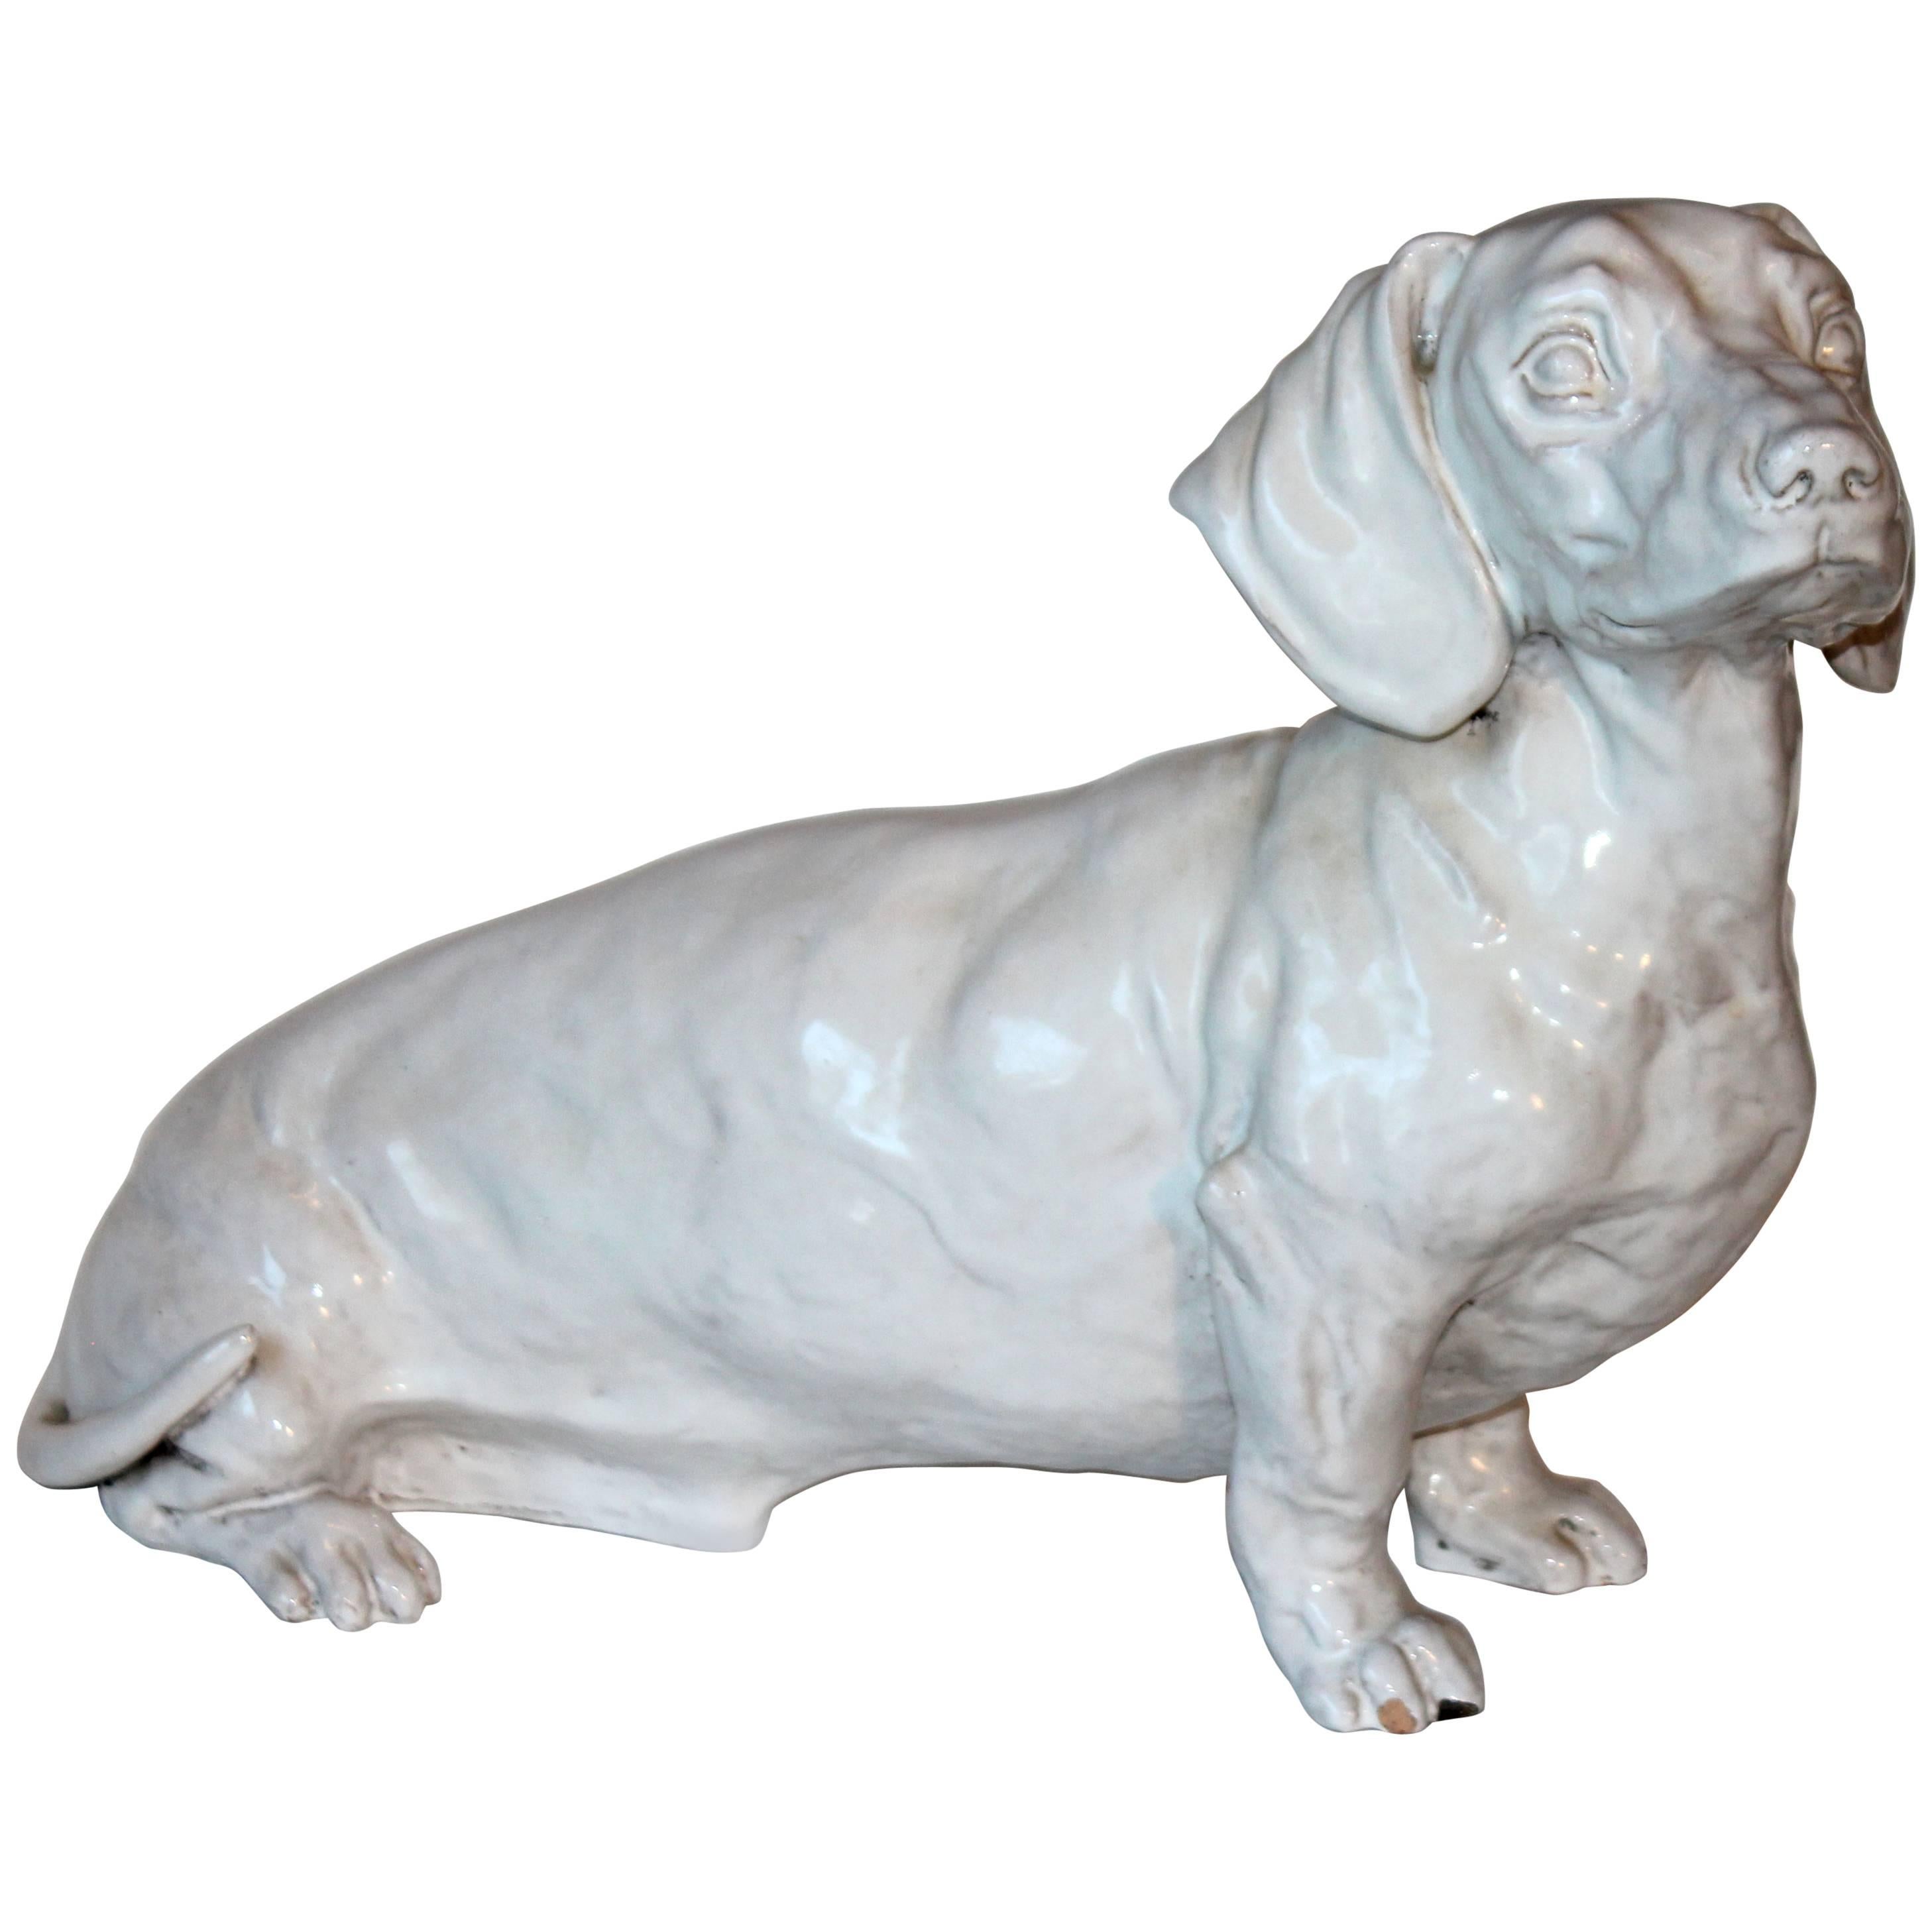 Dachshund Lifesize Vintage Italian Pottery Dog Figure Sculpture